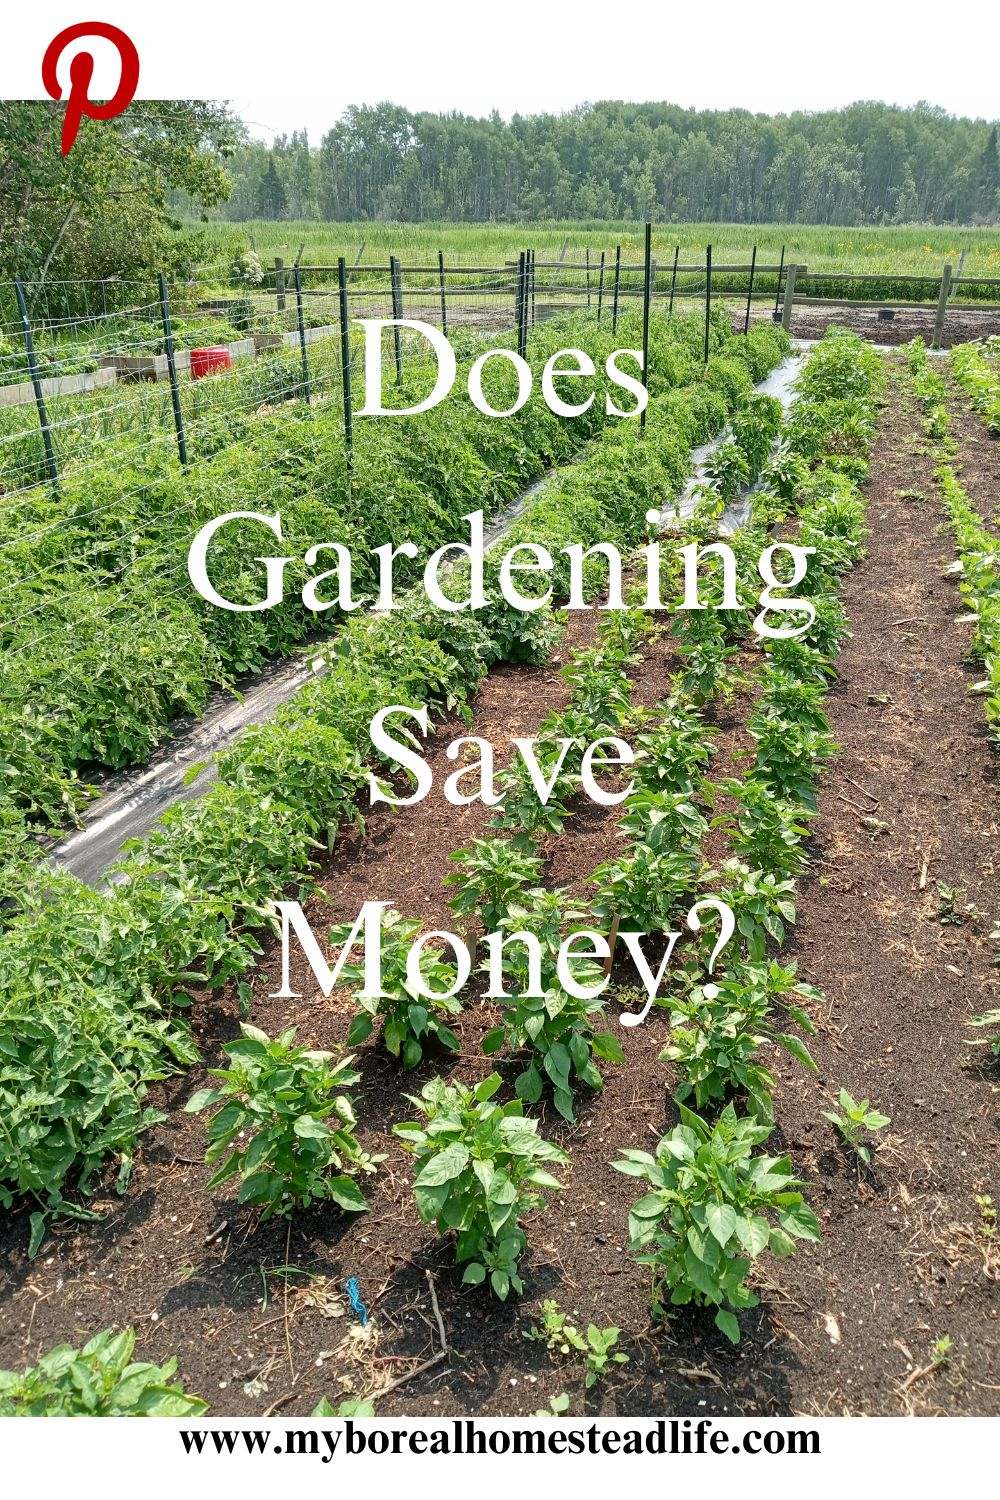 Gardening - Pinterest link